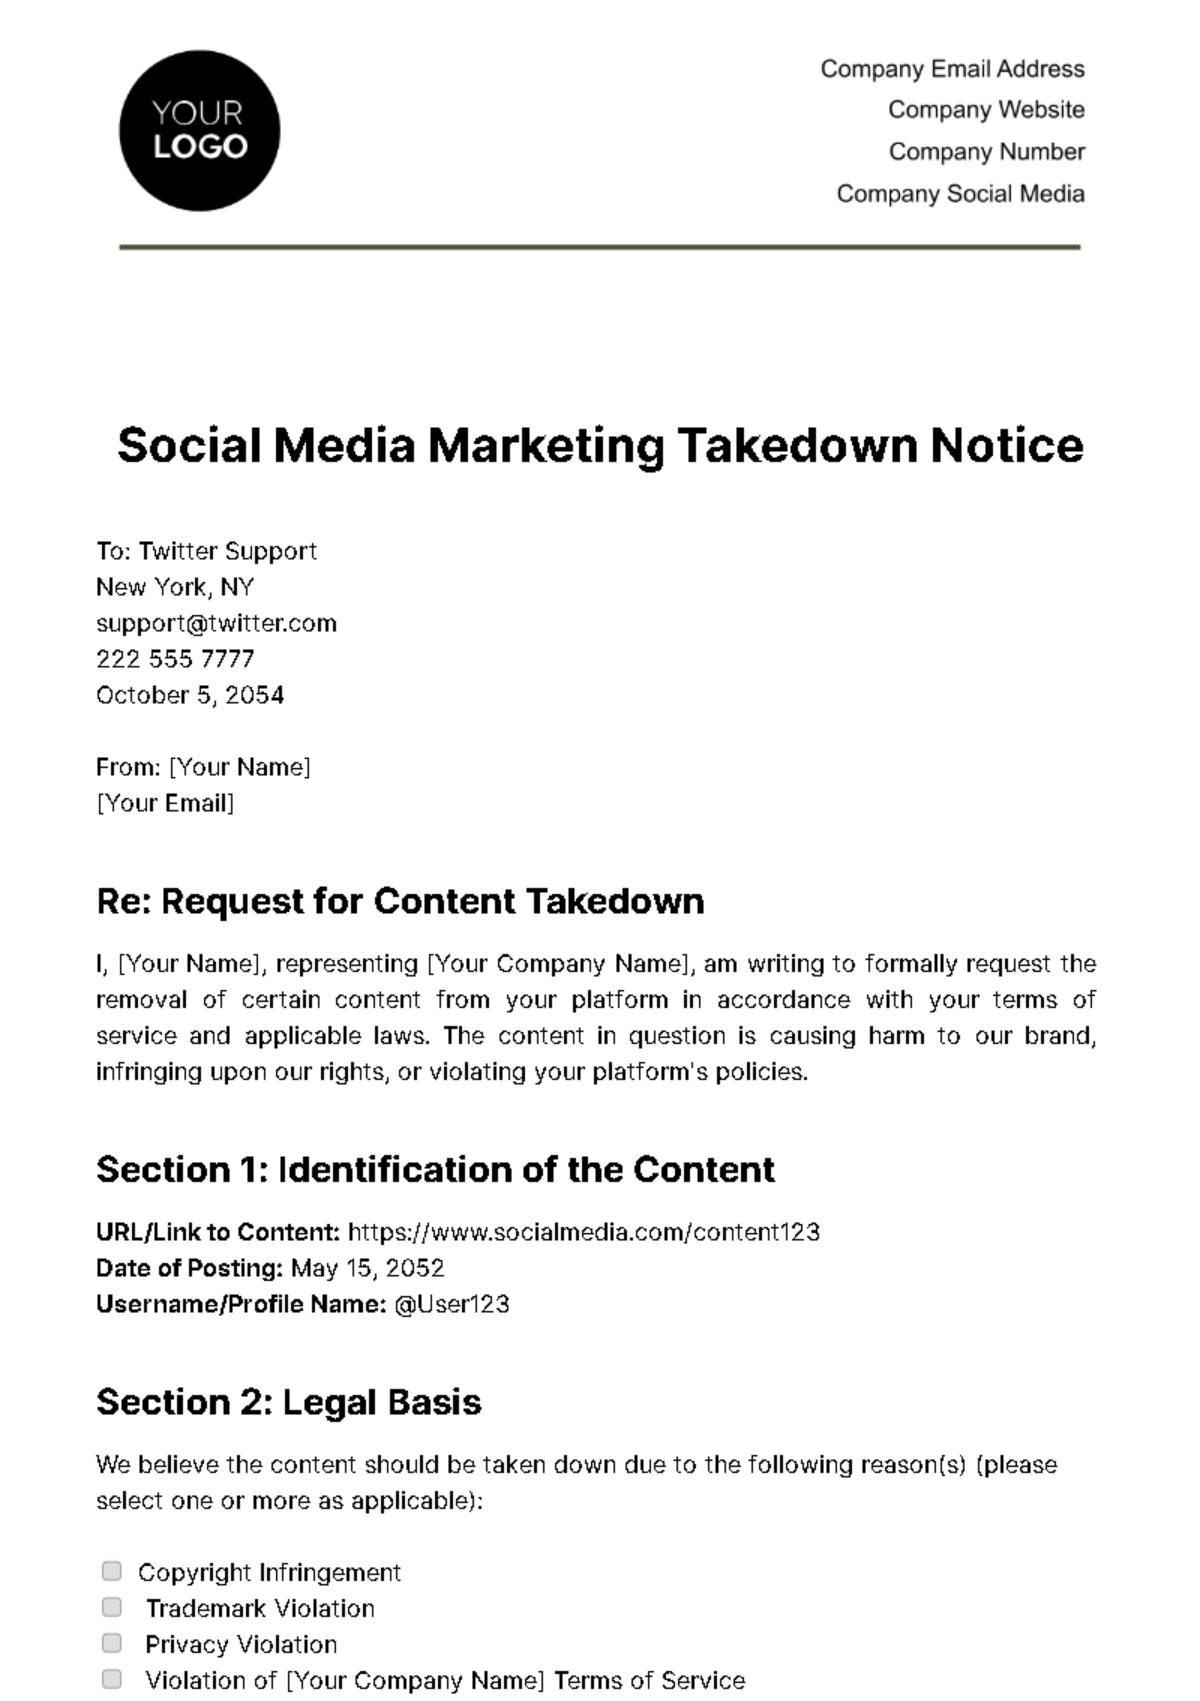 Social Media Marketing Takedown Notice Template